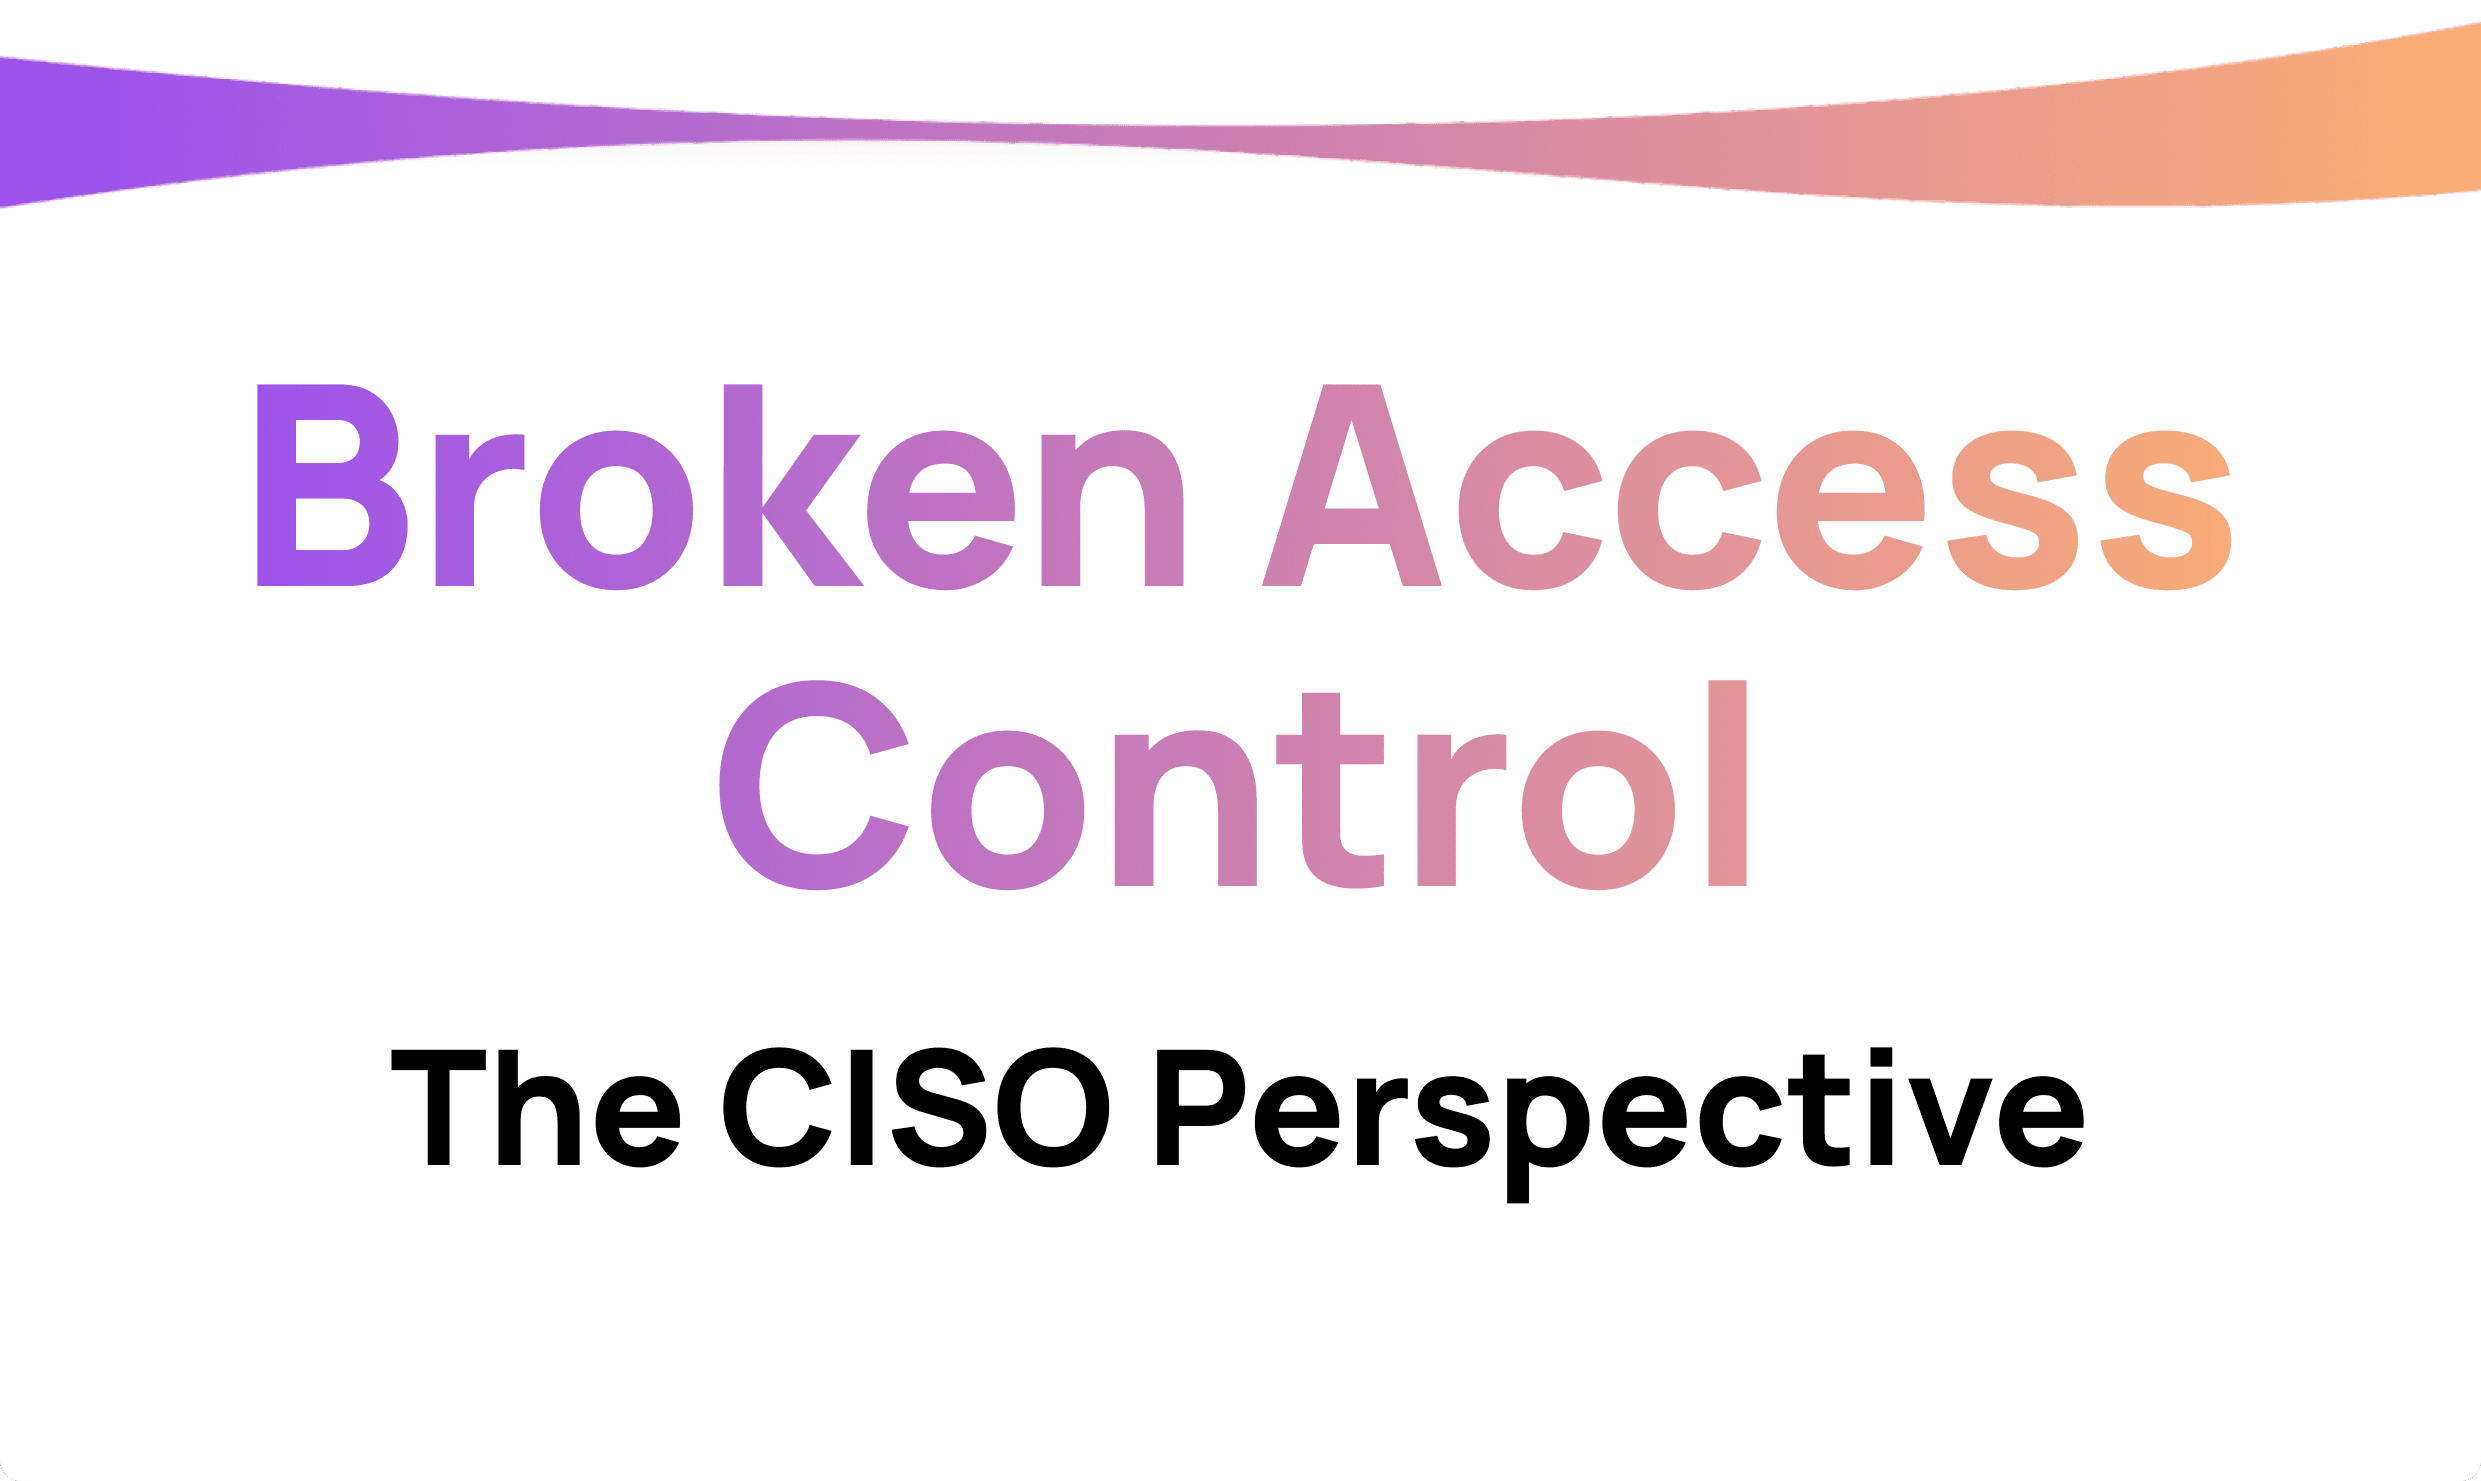 Broken Access Control: The CISO Perspective